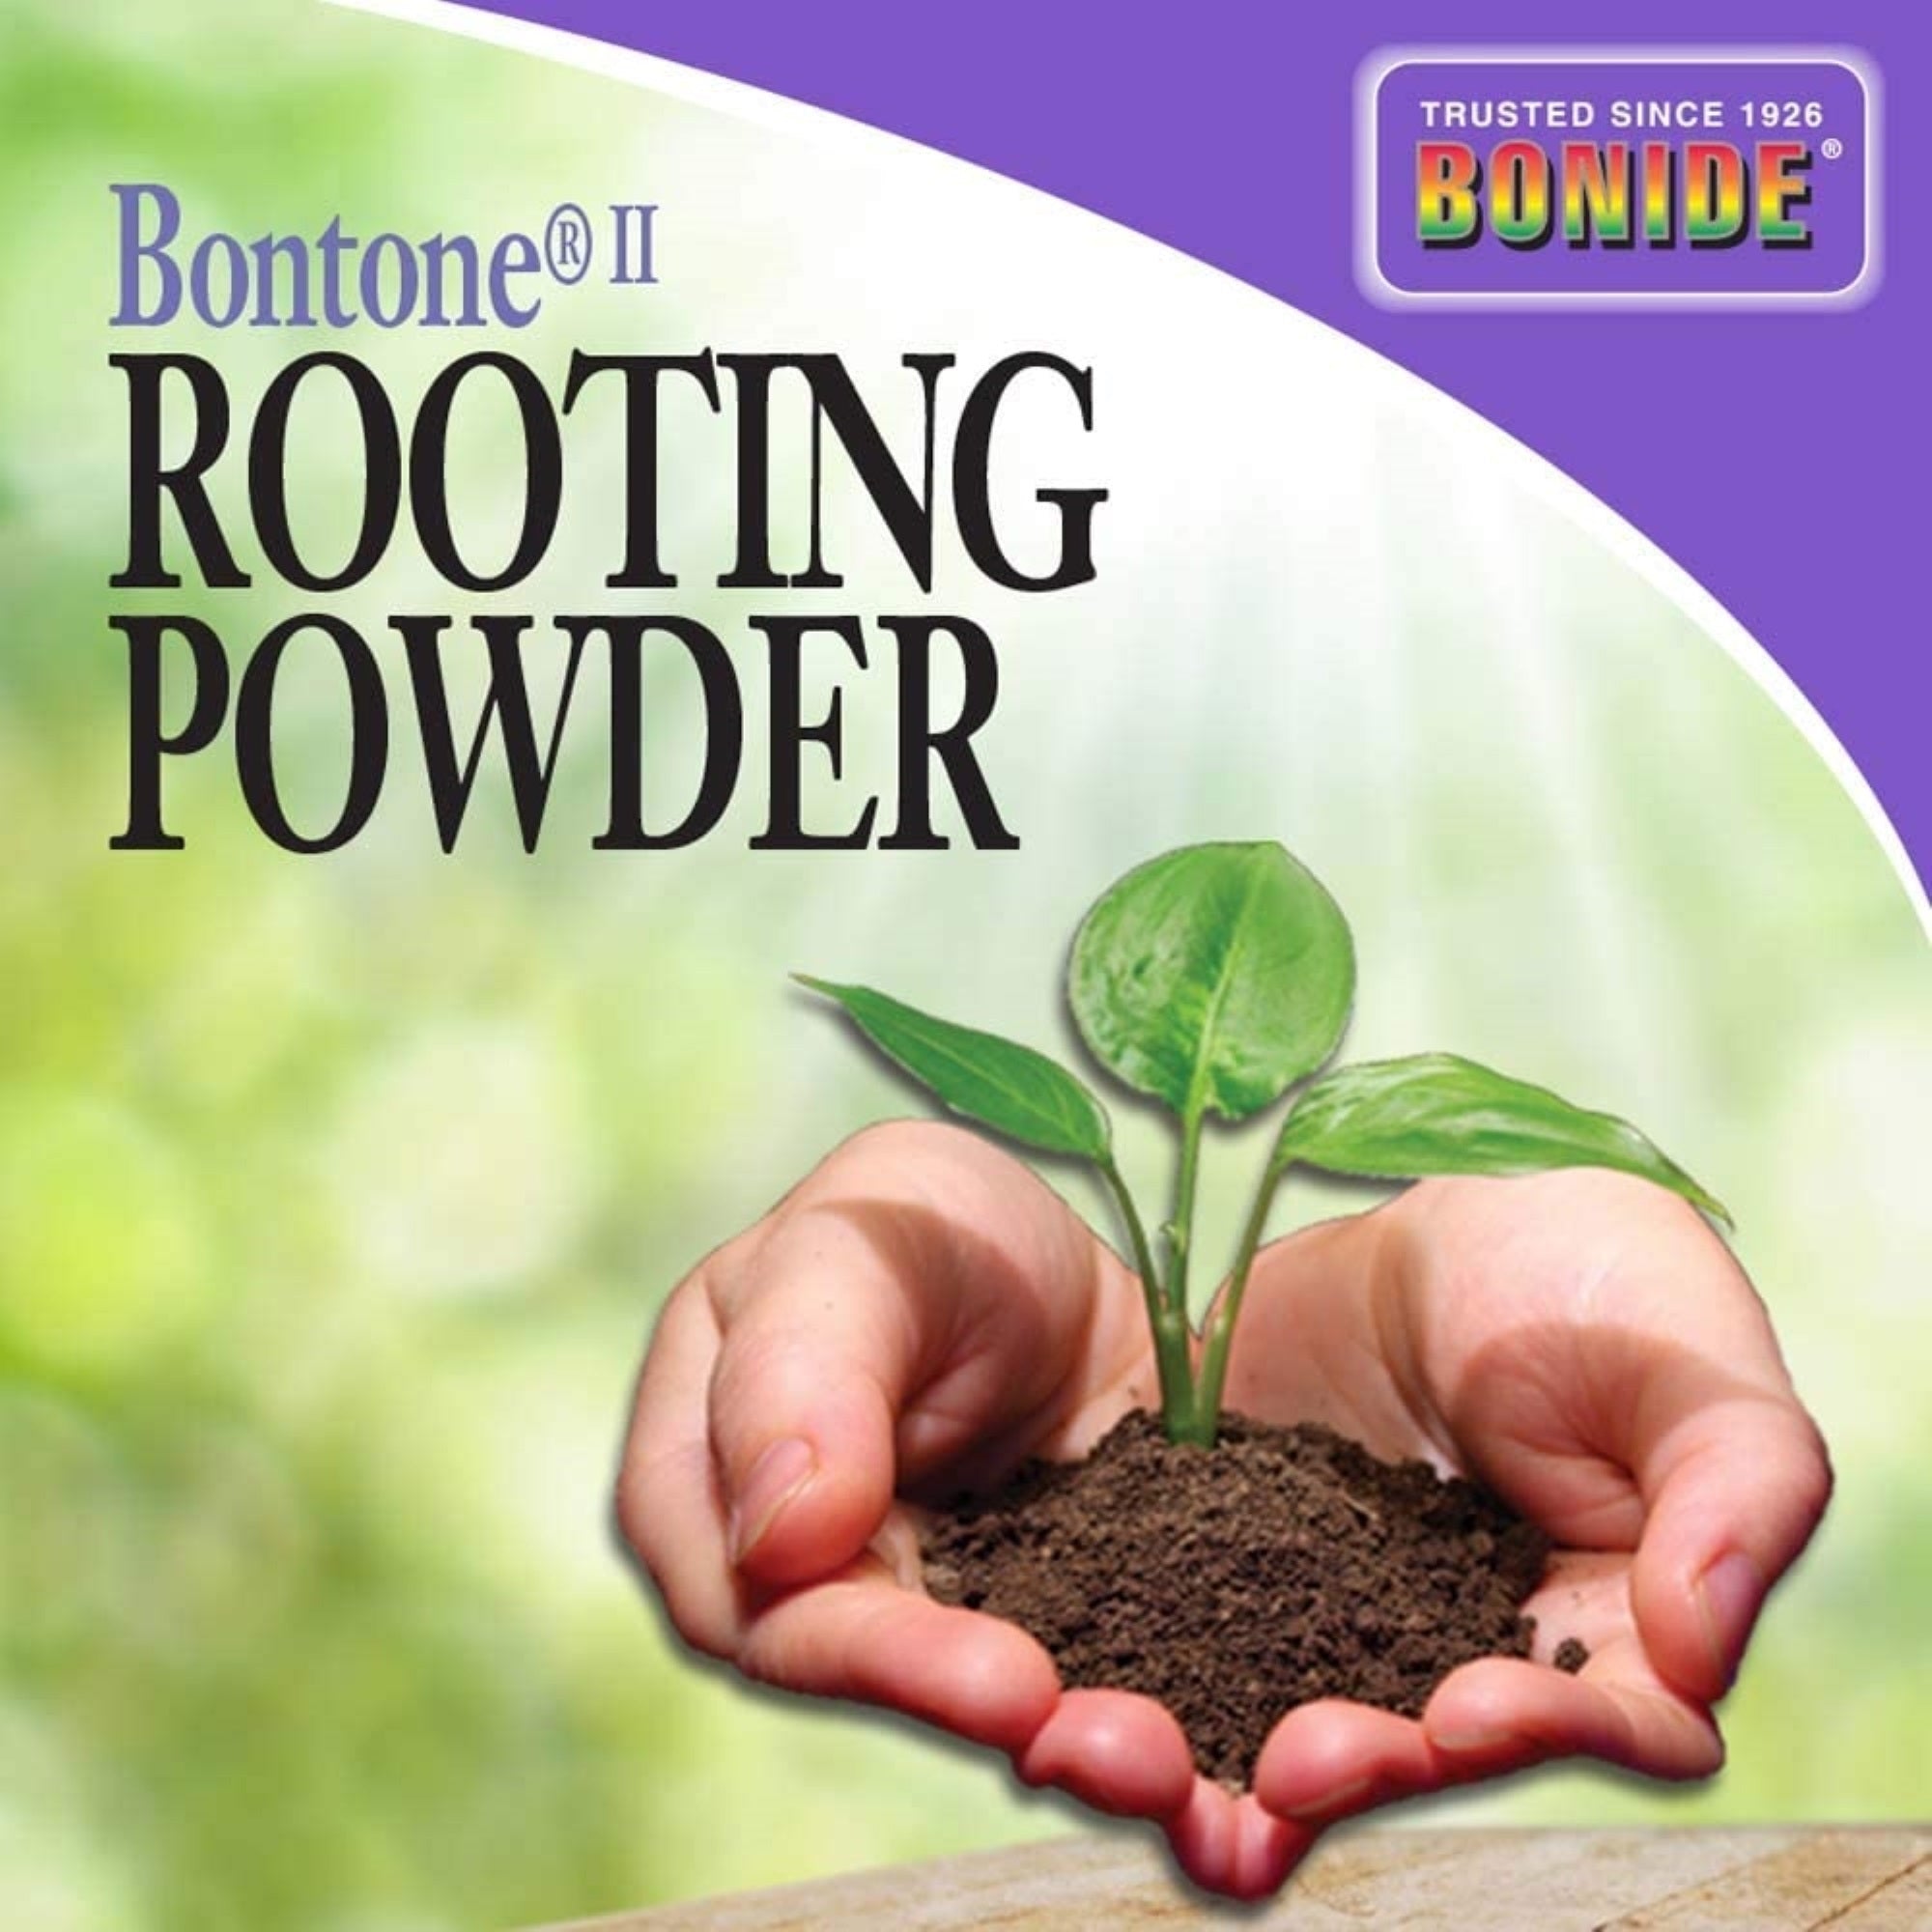 Bonide Bontone Rooting Powder, 1.25-Ounce